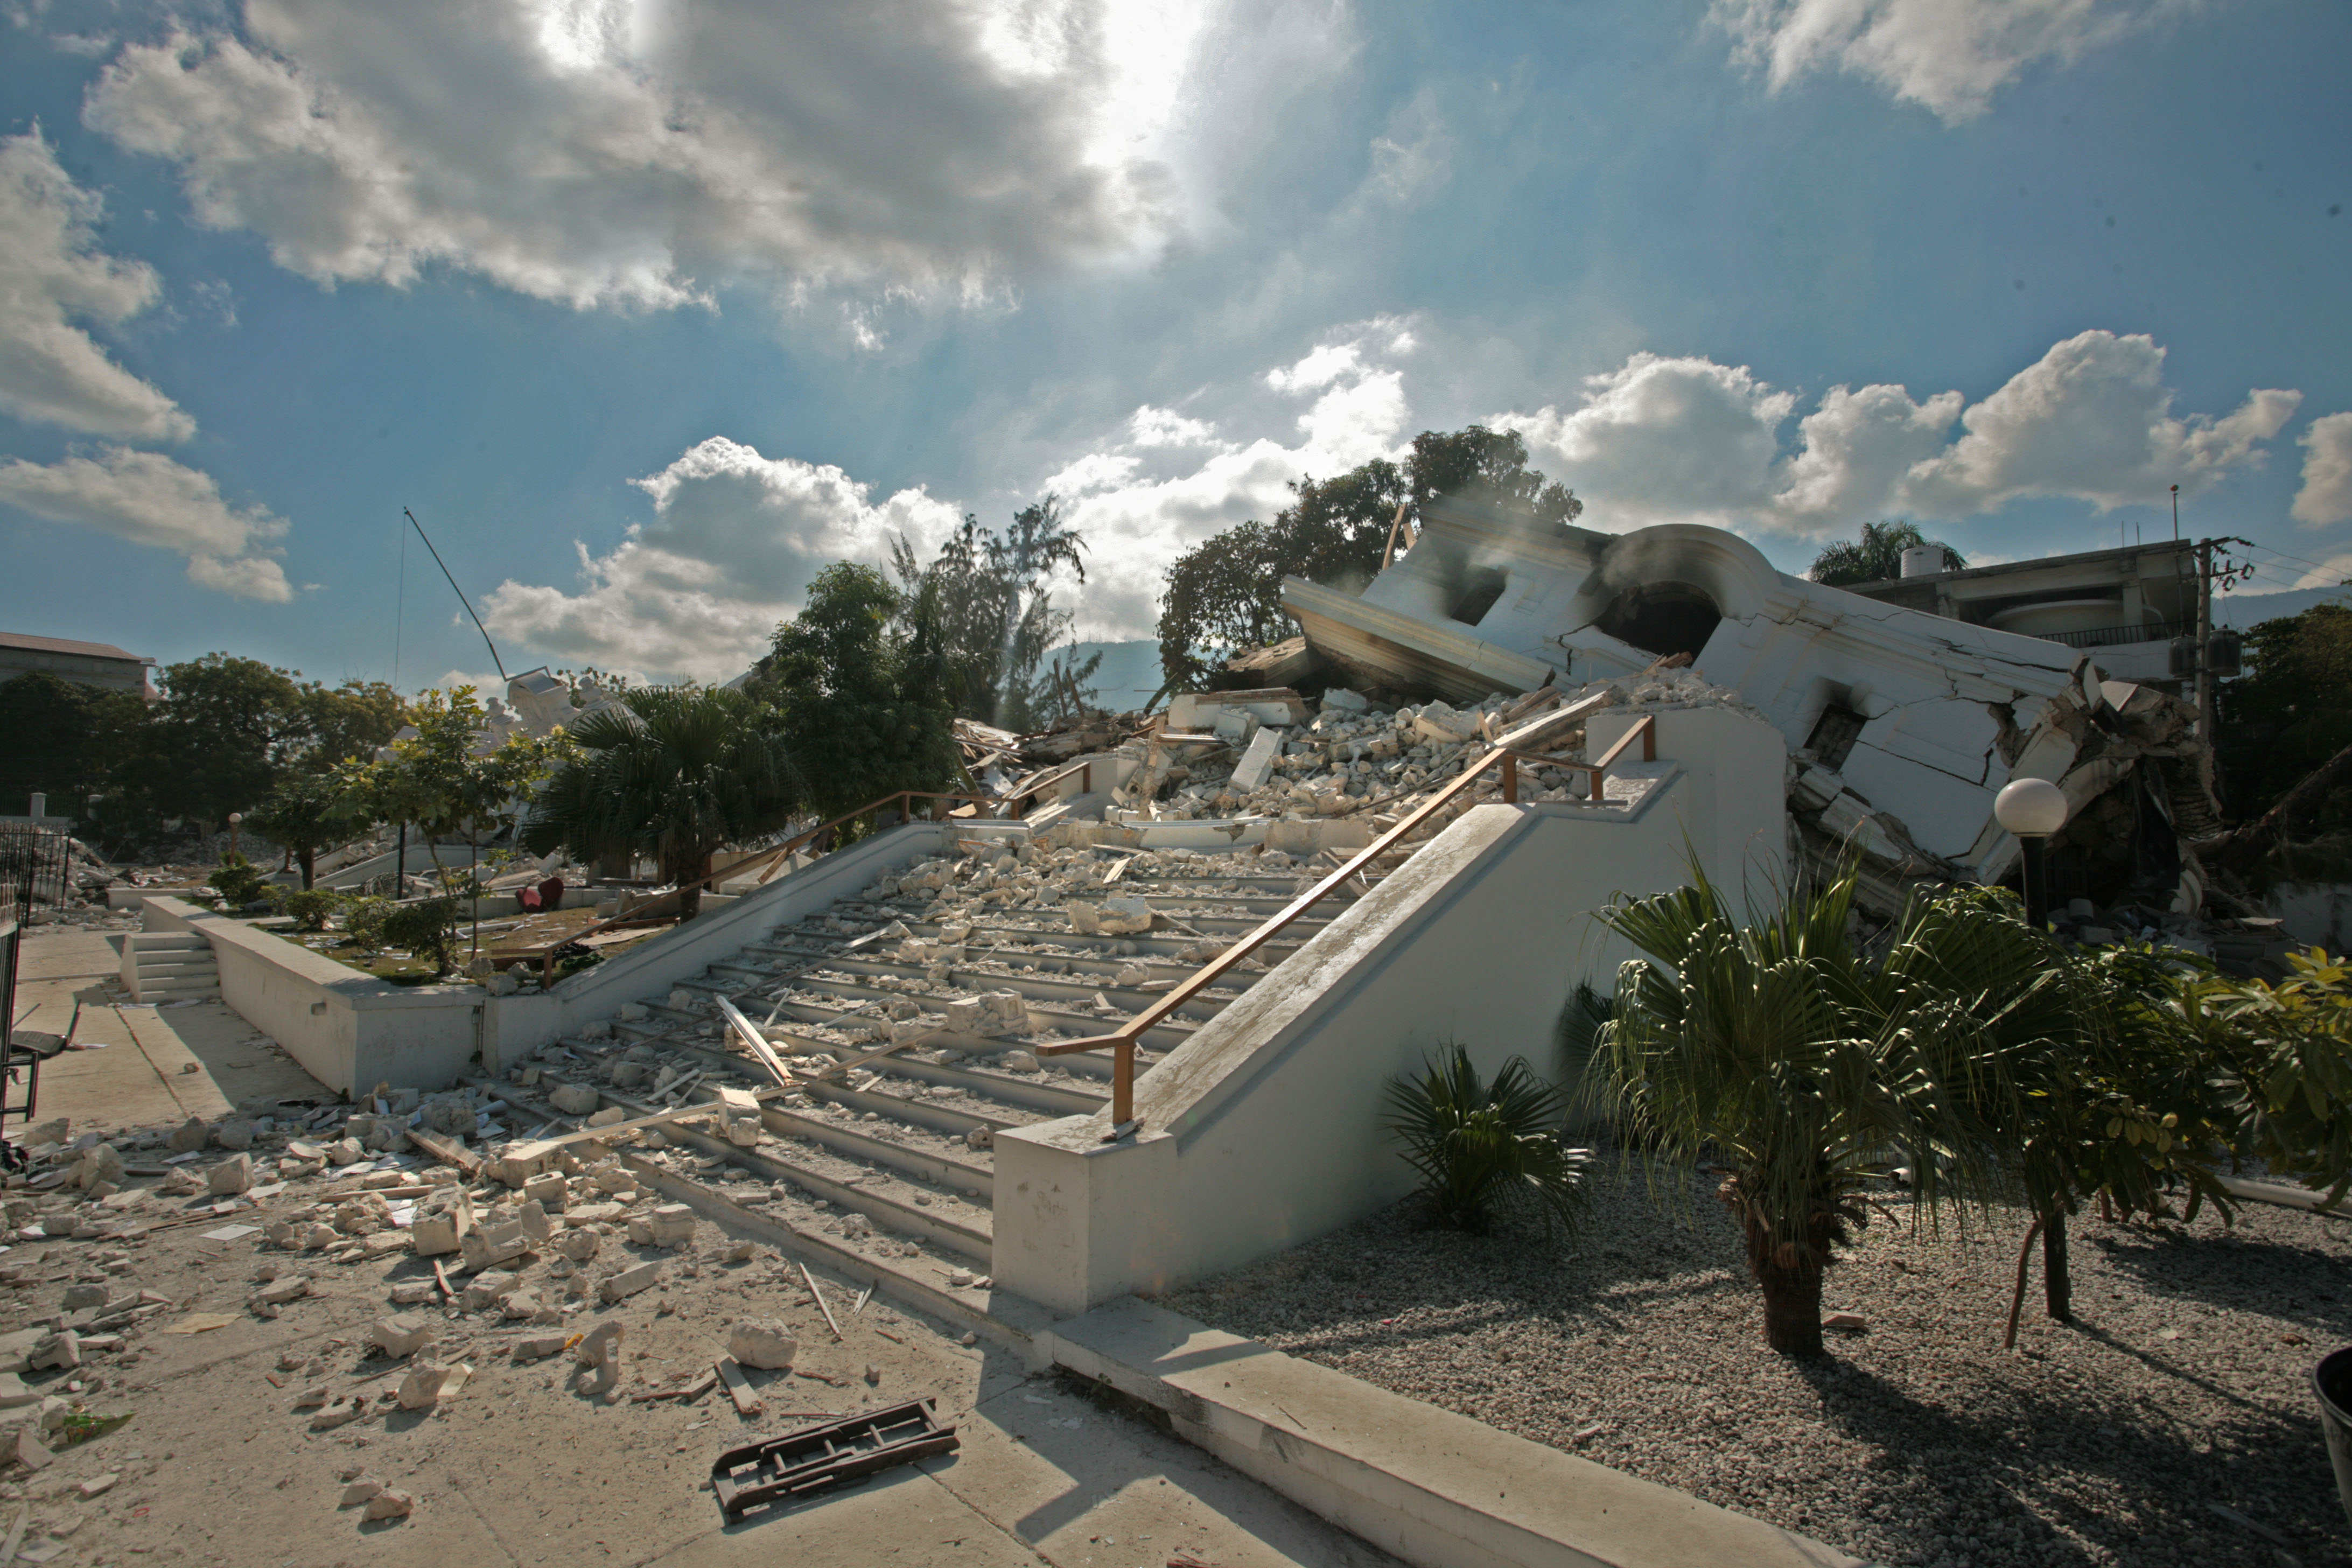 Roberto Stephenson - “Sans titre”, Haiti, the Earthquake City, 2010 